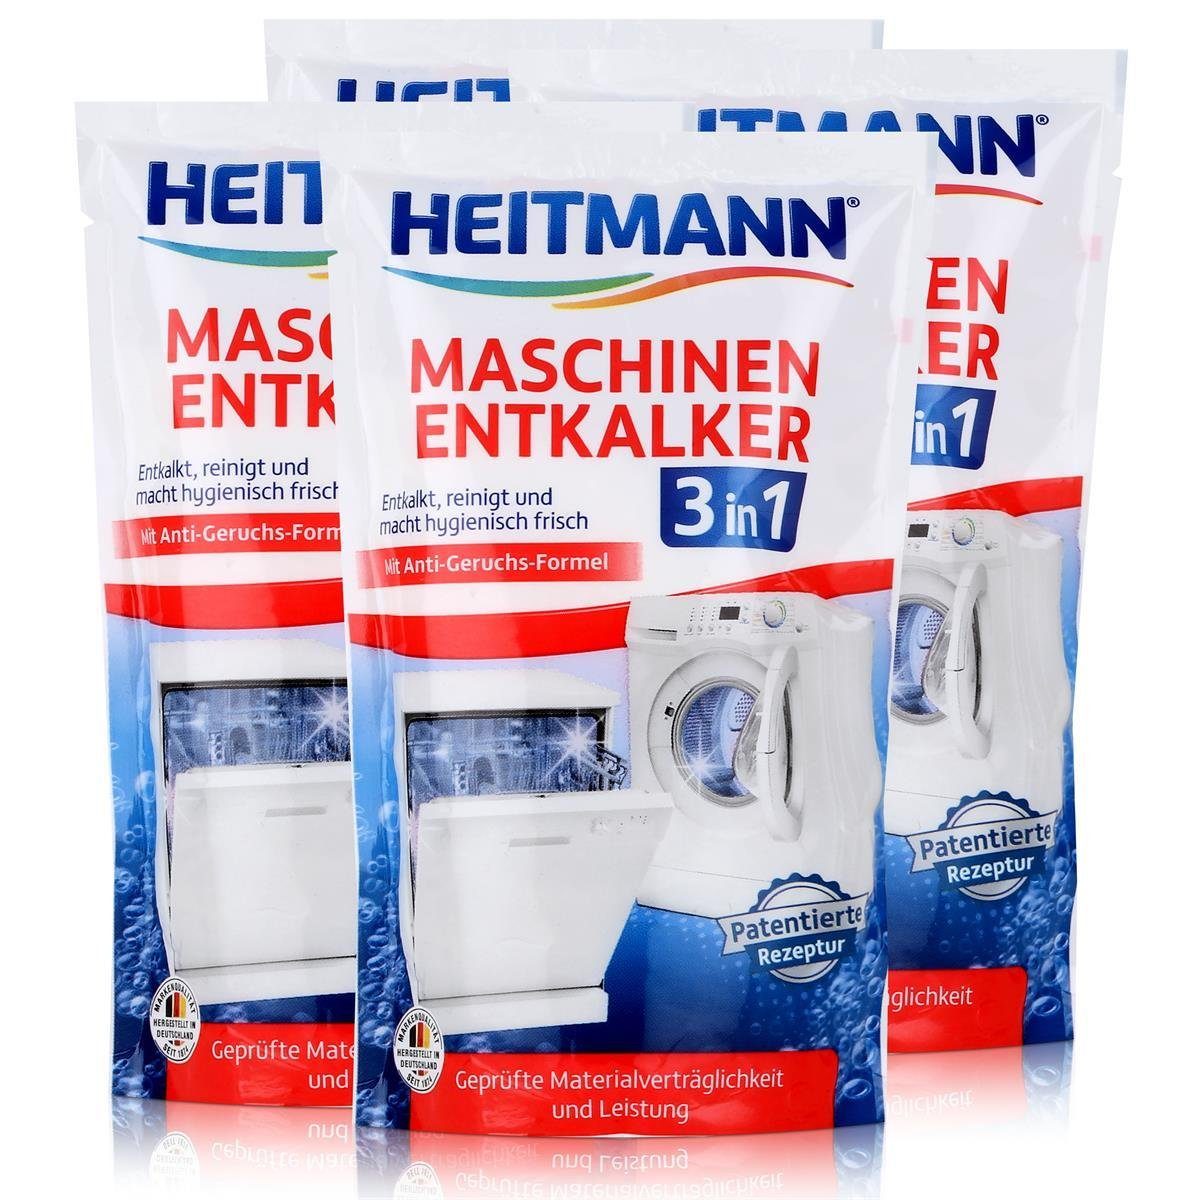 HEITMANN Waschmaschinen und Spezialwaschmittel 175g Geschirrspüler Maschinen - Entkalker Heitmann